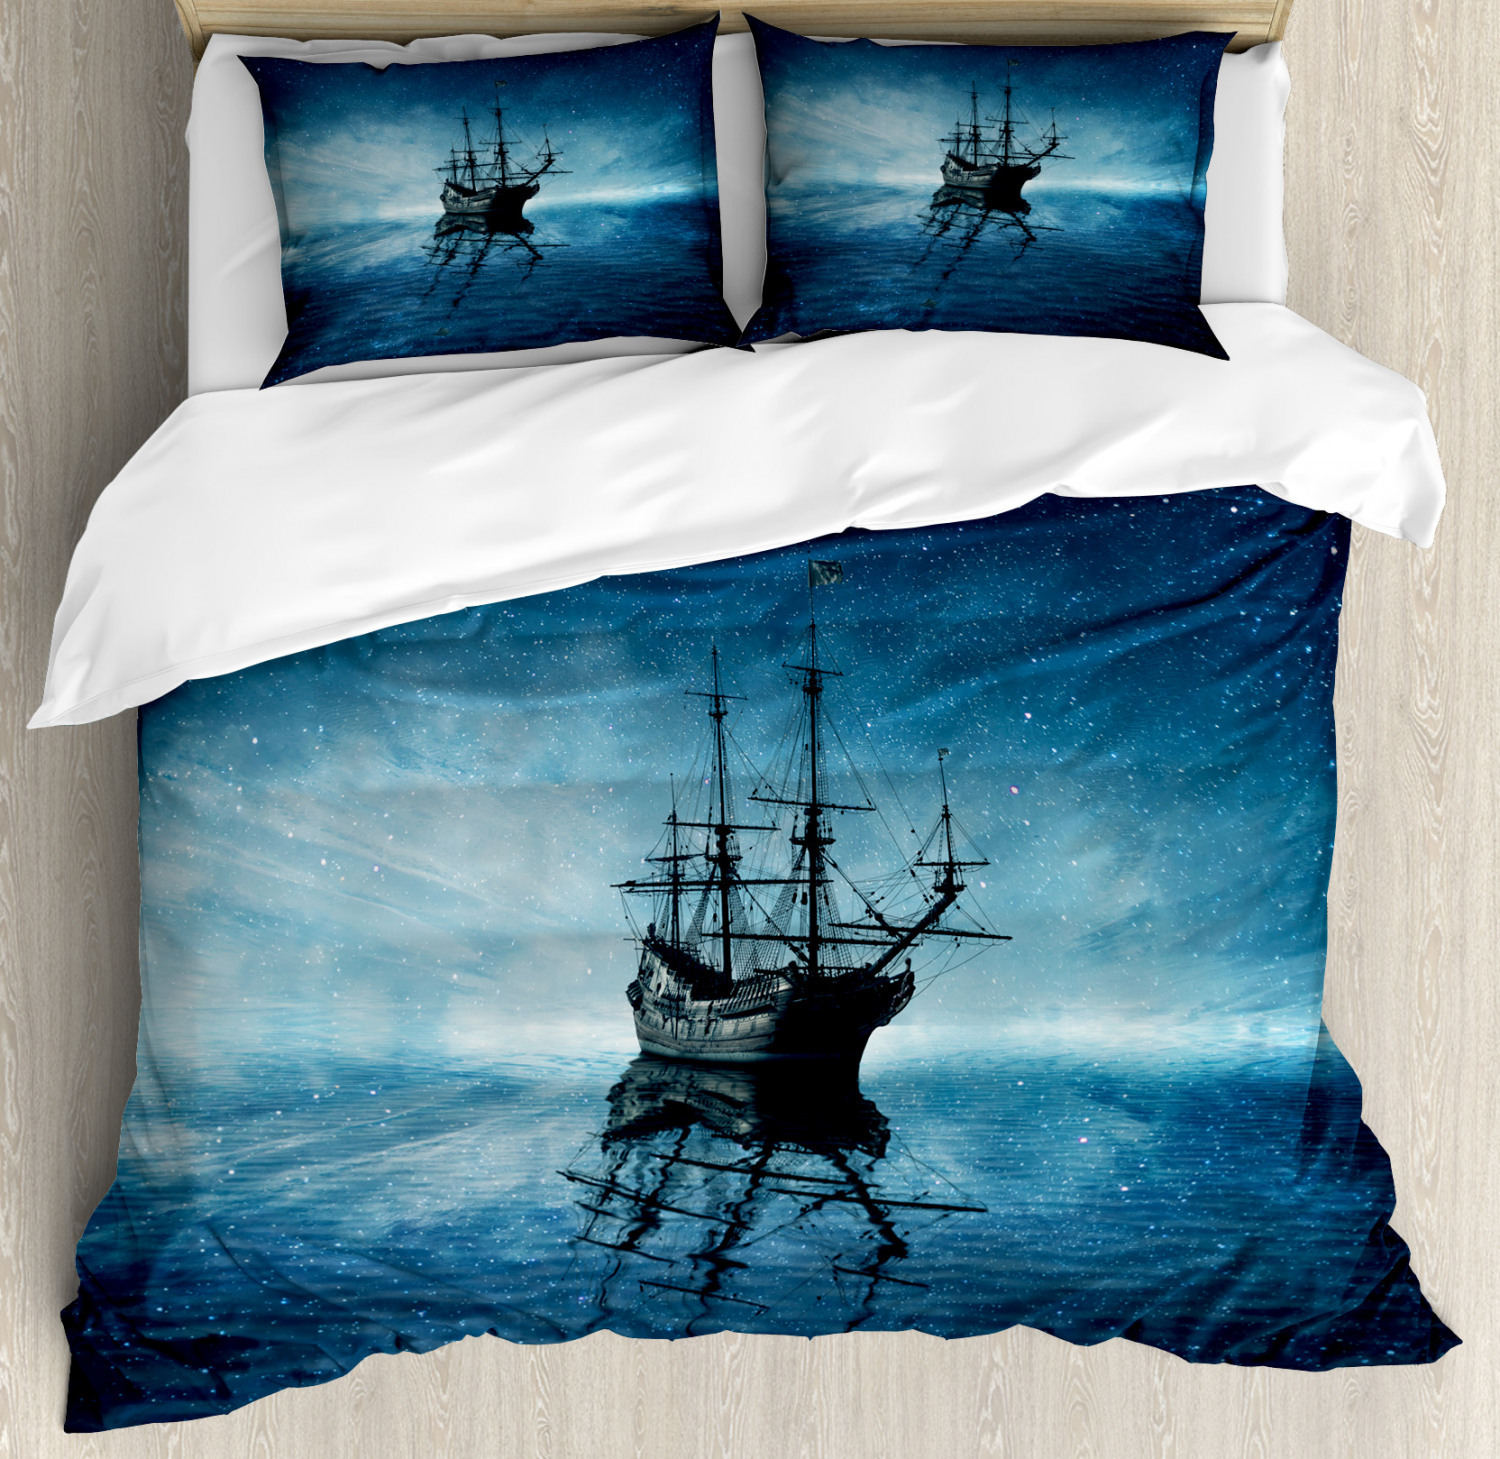 Pirate Ship Duvet Cover Set With Pillow Shams Night Sky Ocean Print